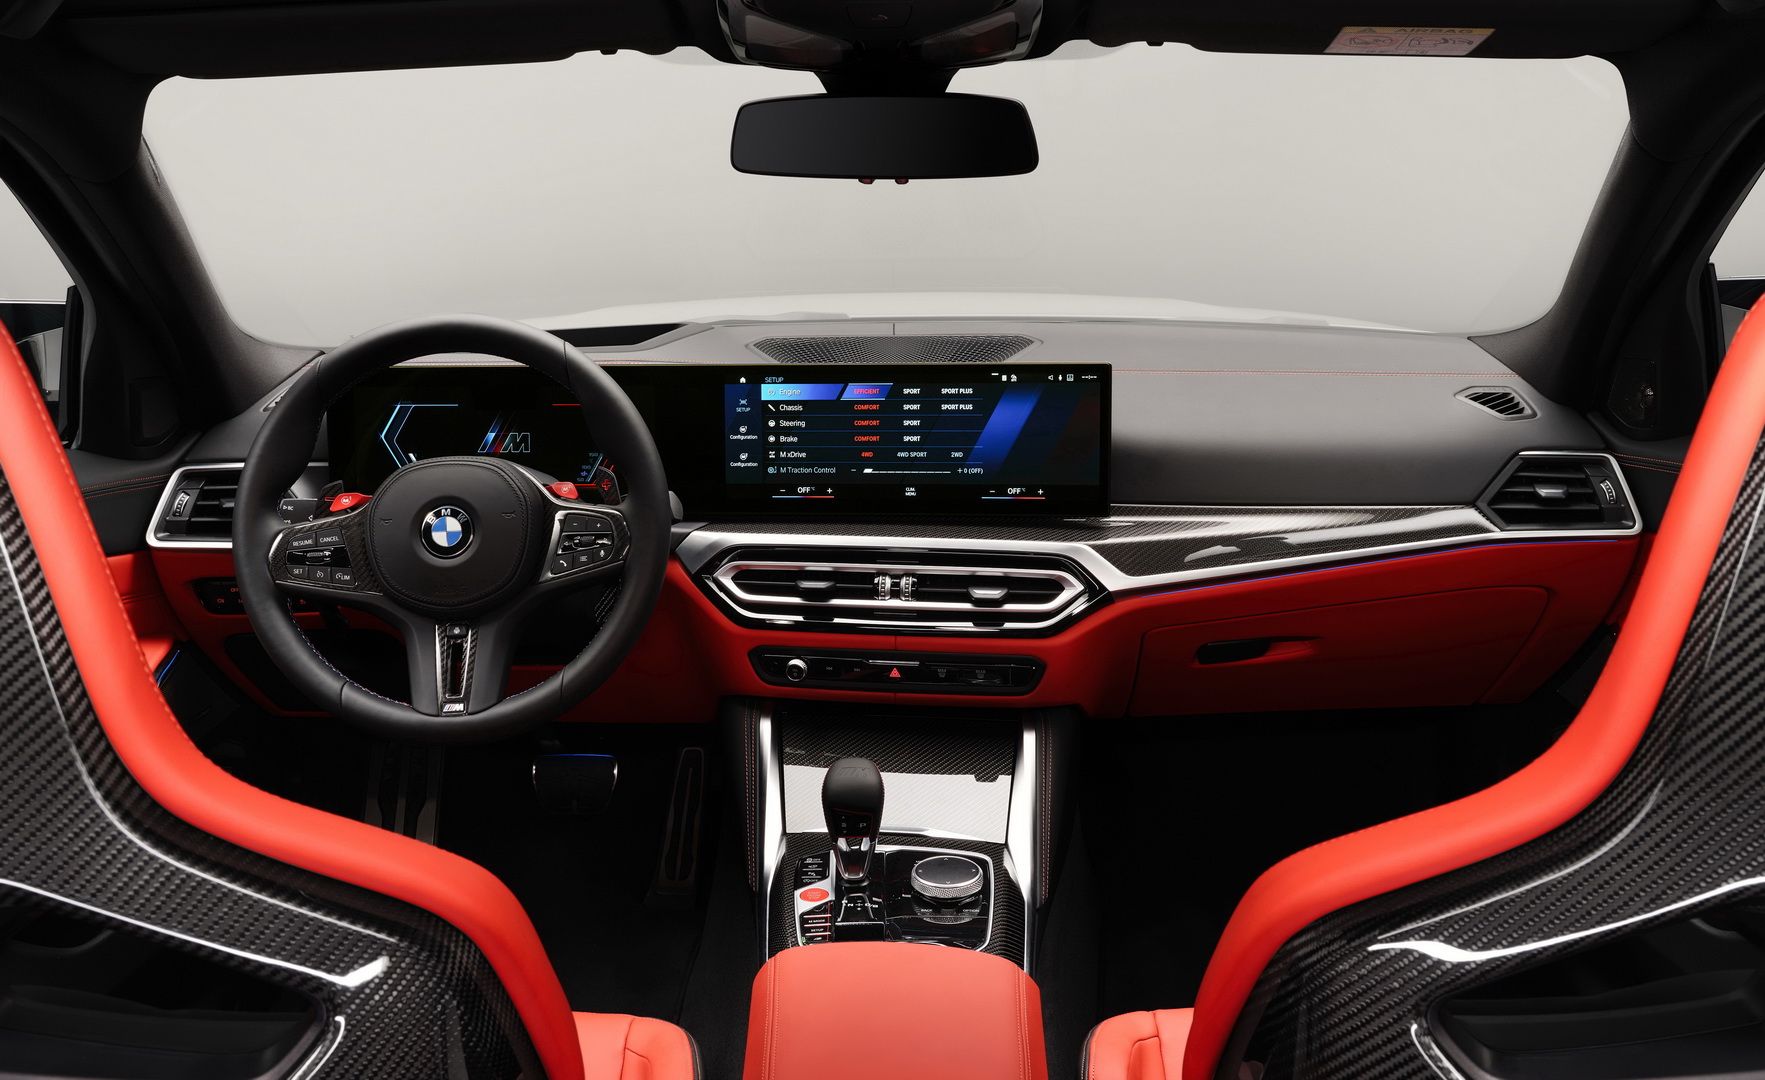 BMW M4 interior - Cockpit